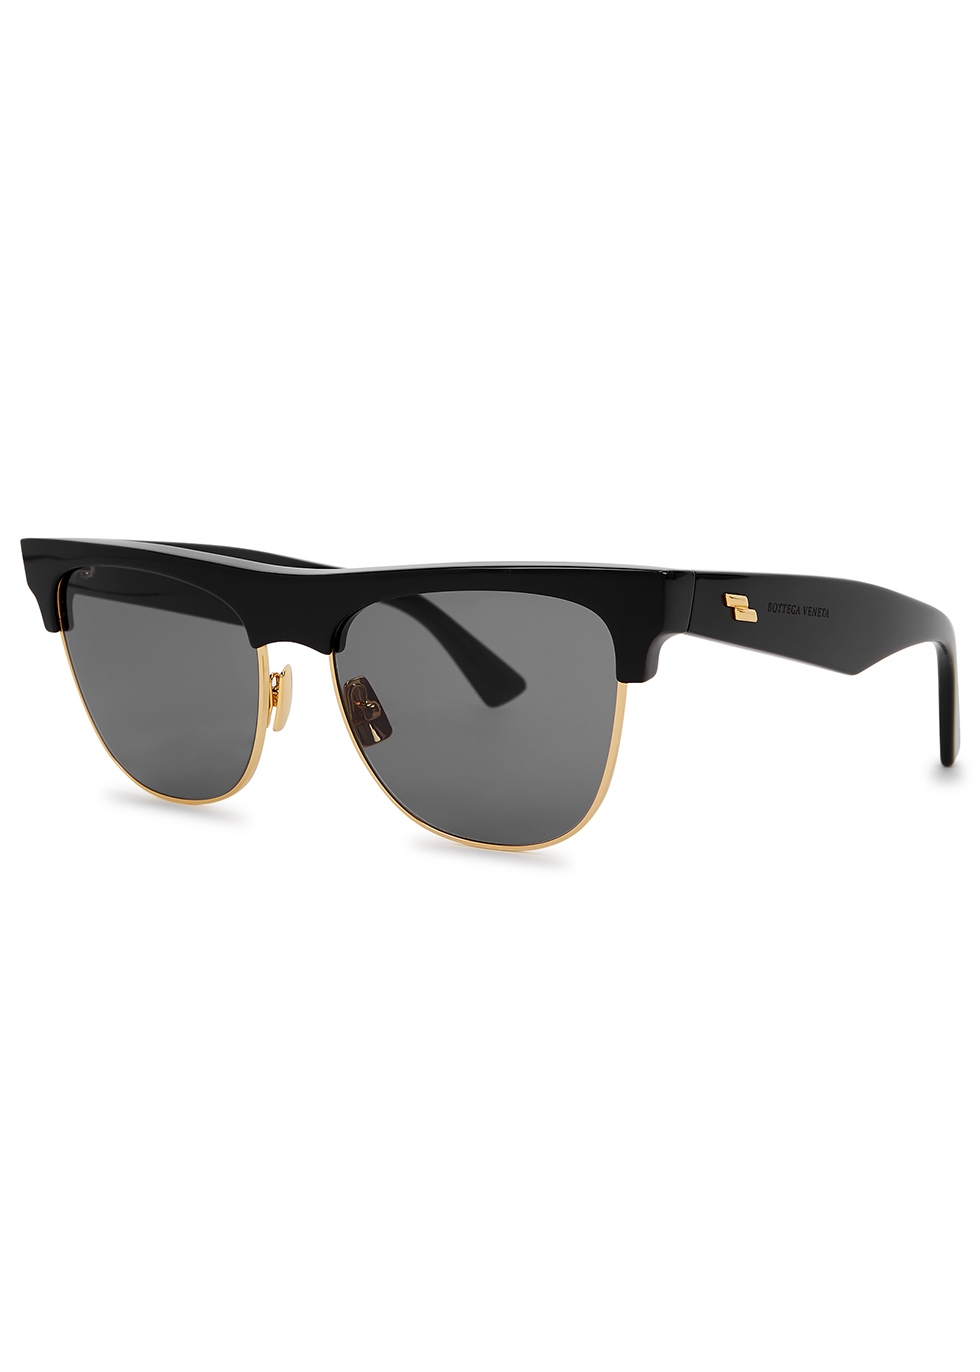 men's clubmaster style sunglasses